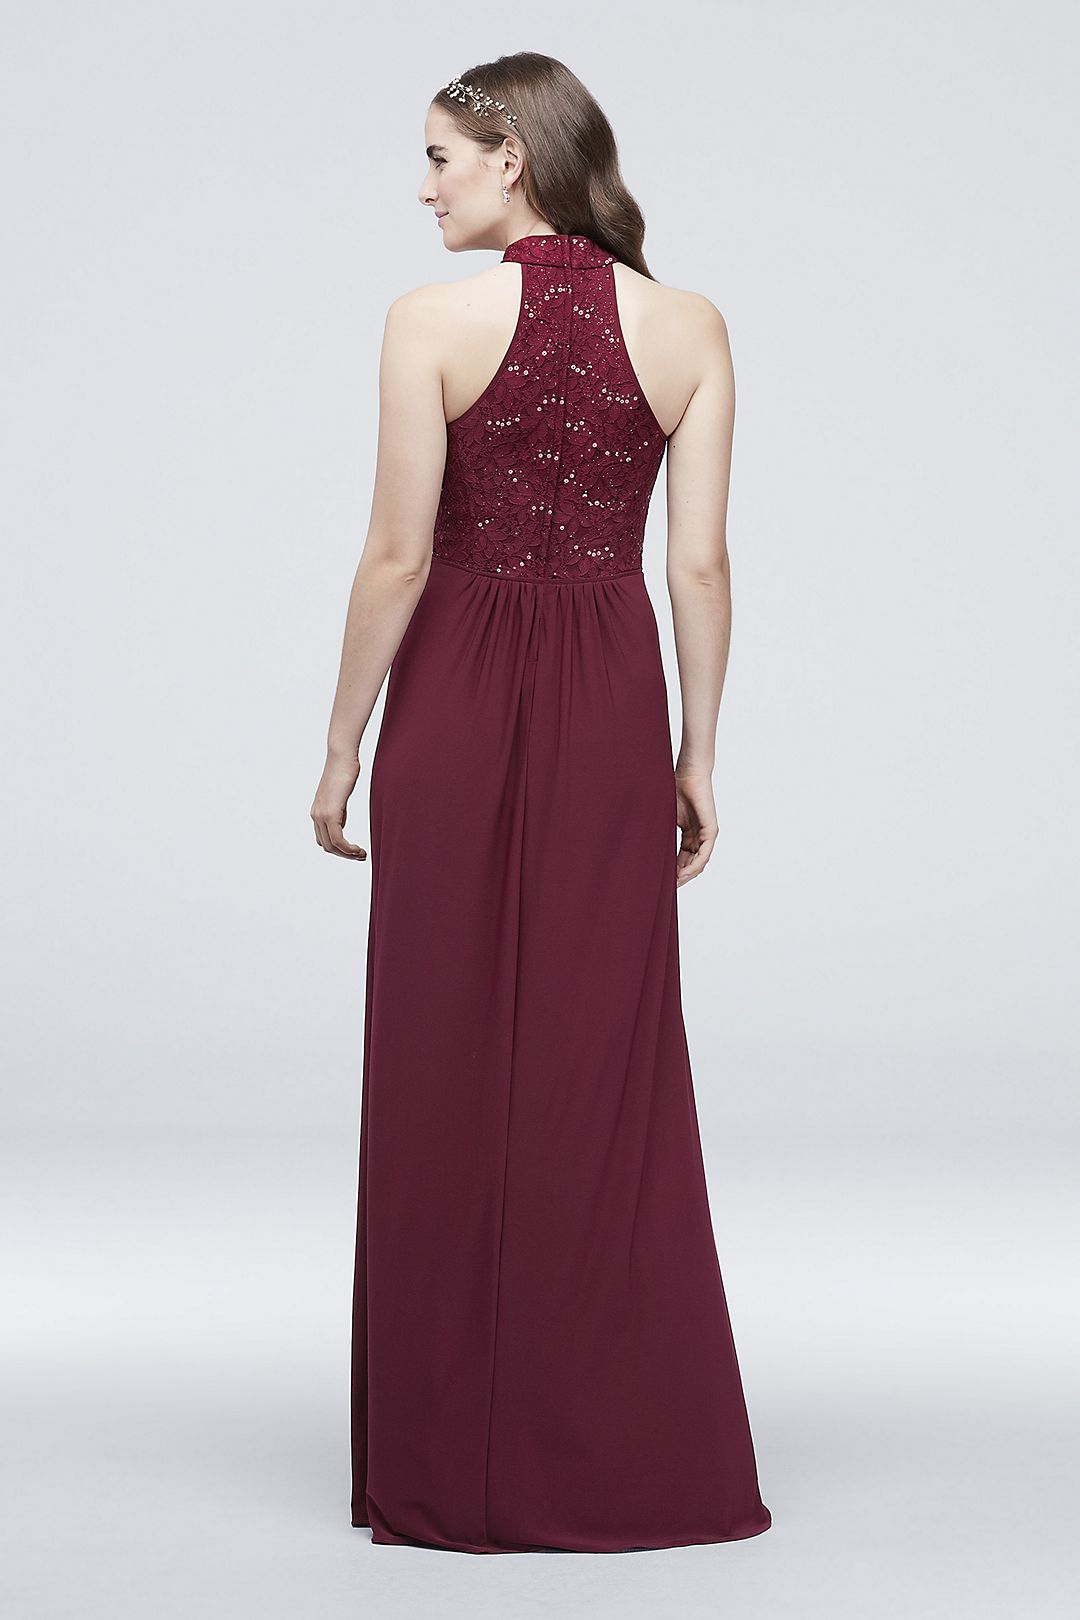 Lace and Sequin Mockneck Jersey A-Line Dress Image 4